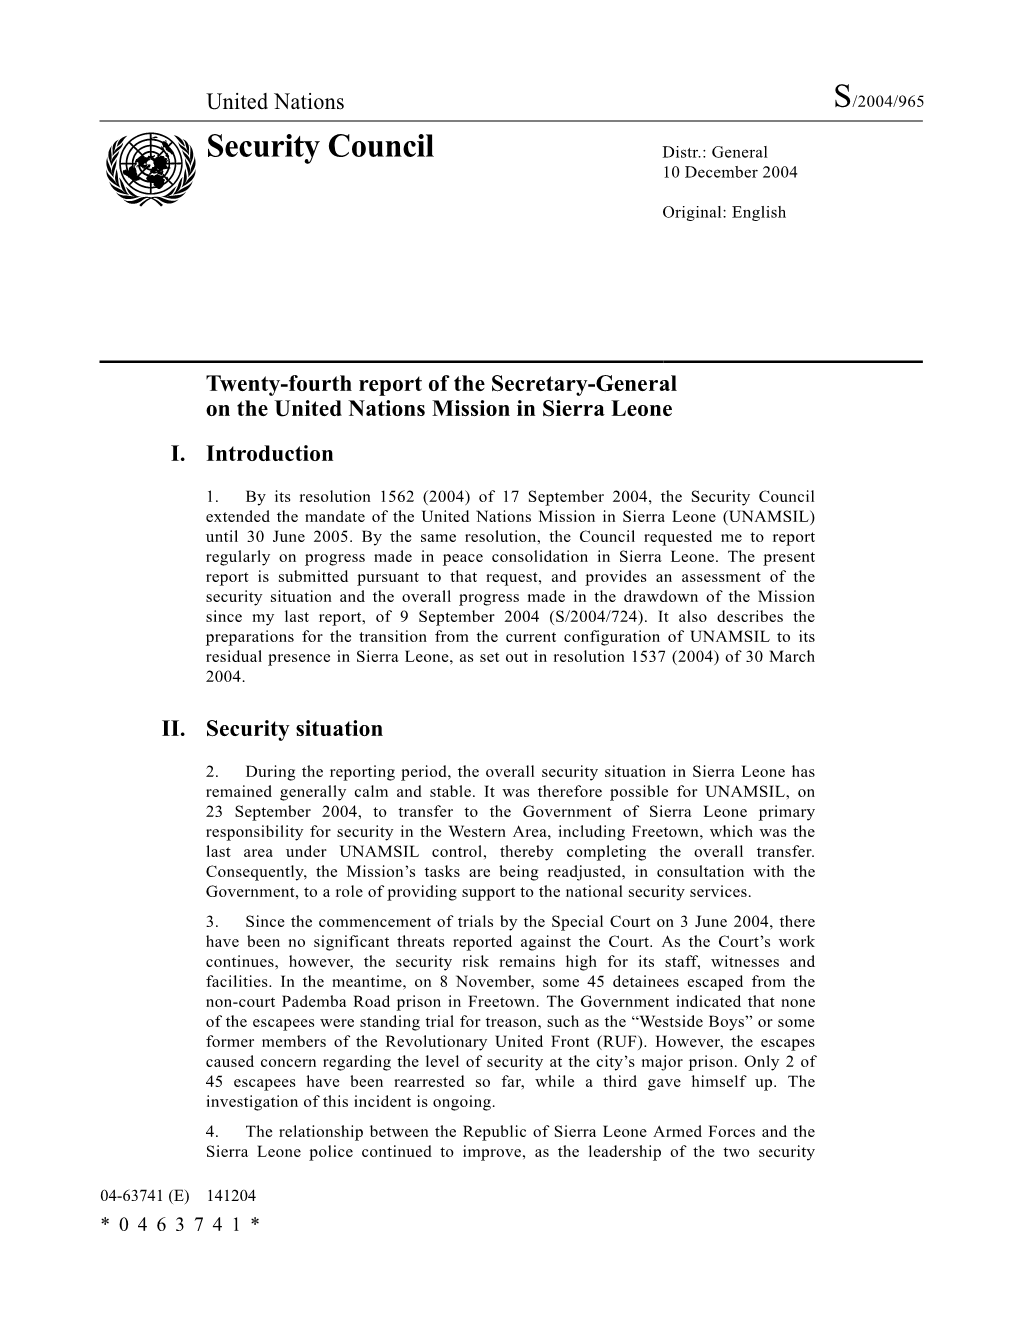 Security Council Distr.: General 10 December 2004